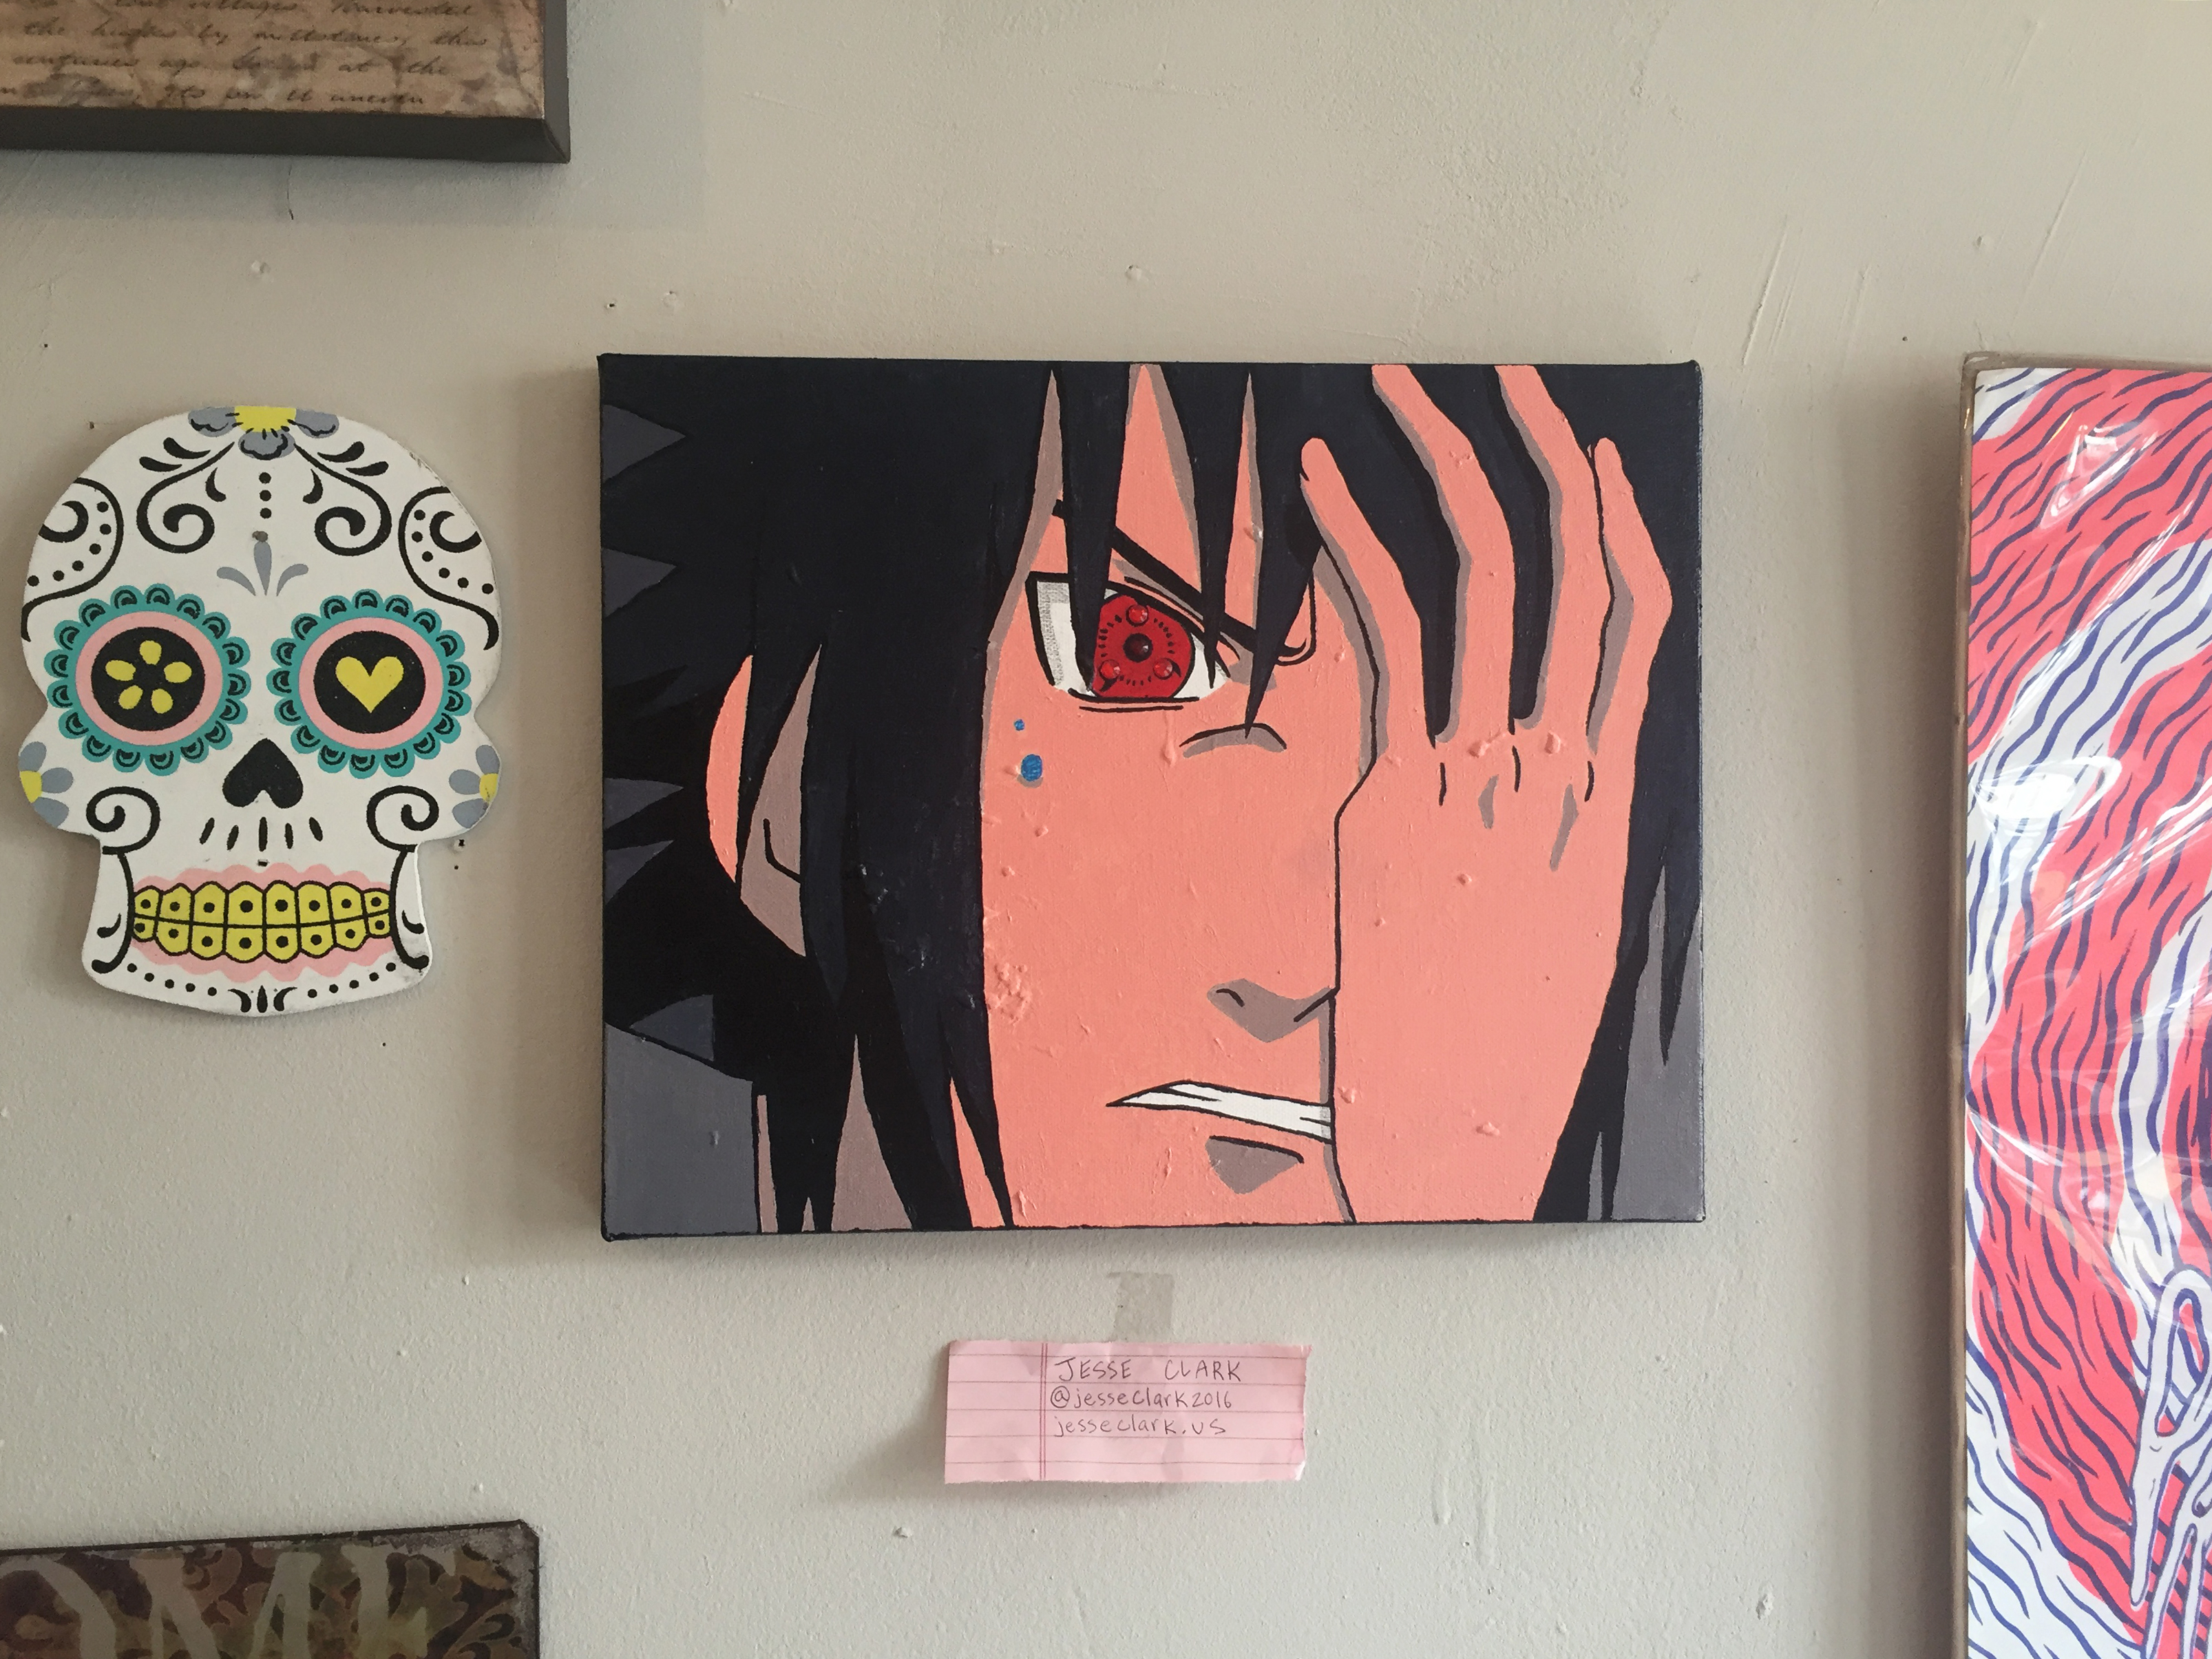 Acrylic painting of Sasuke from Naruto covering one eye and grimacing